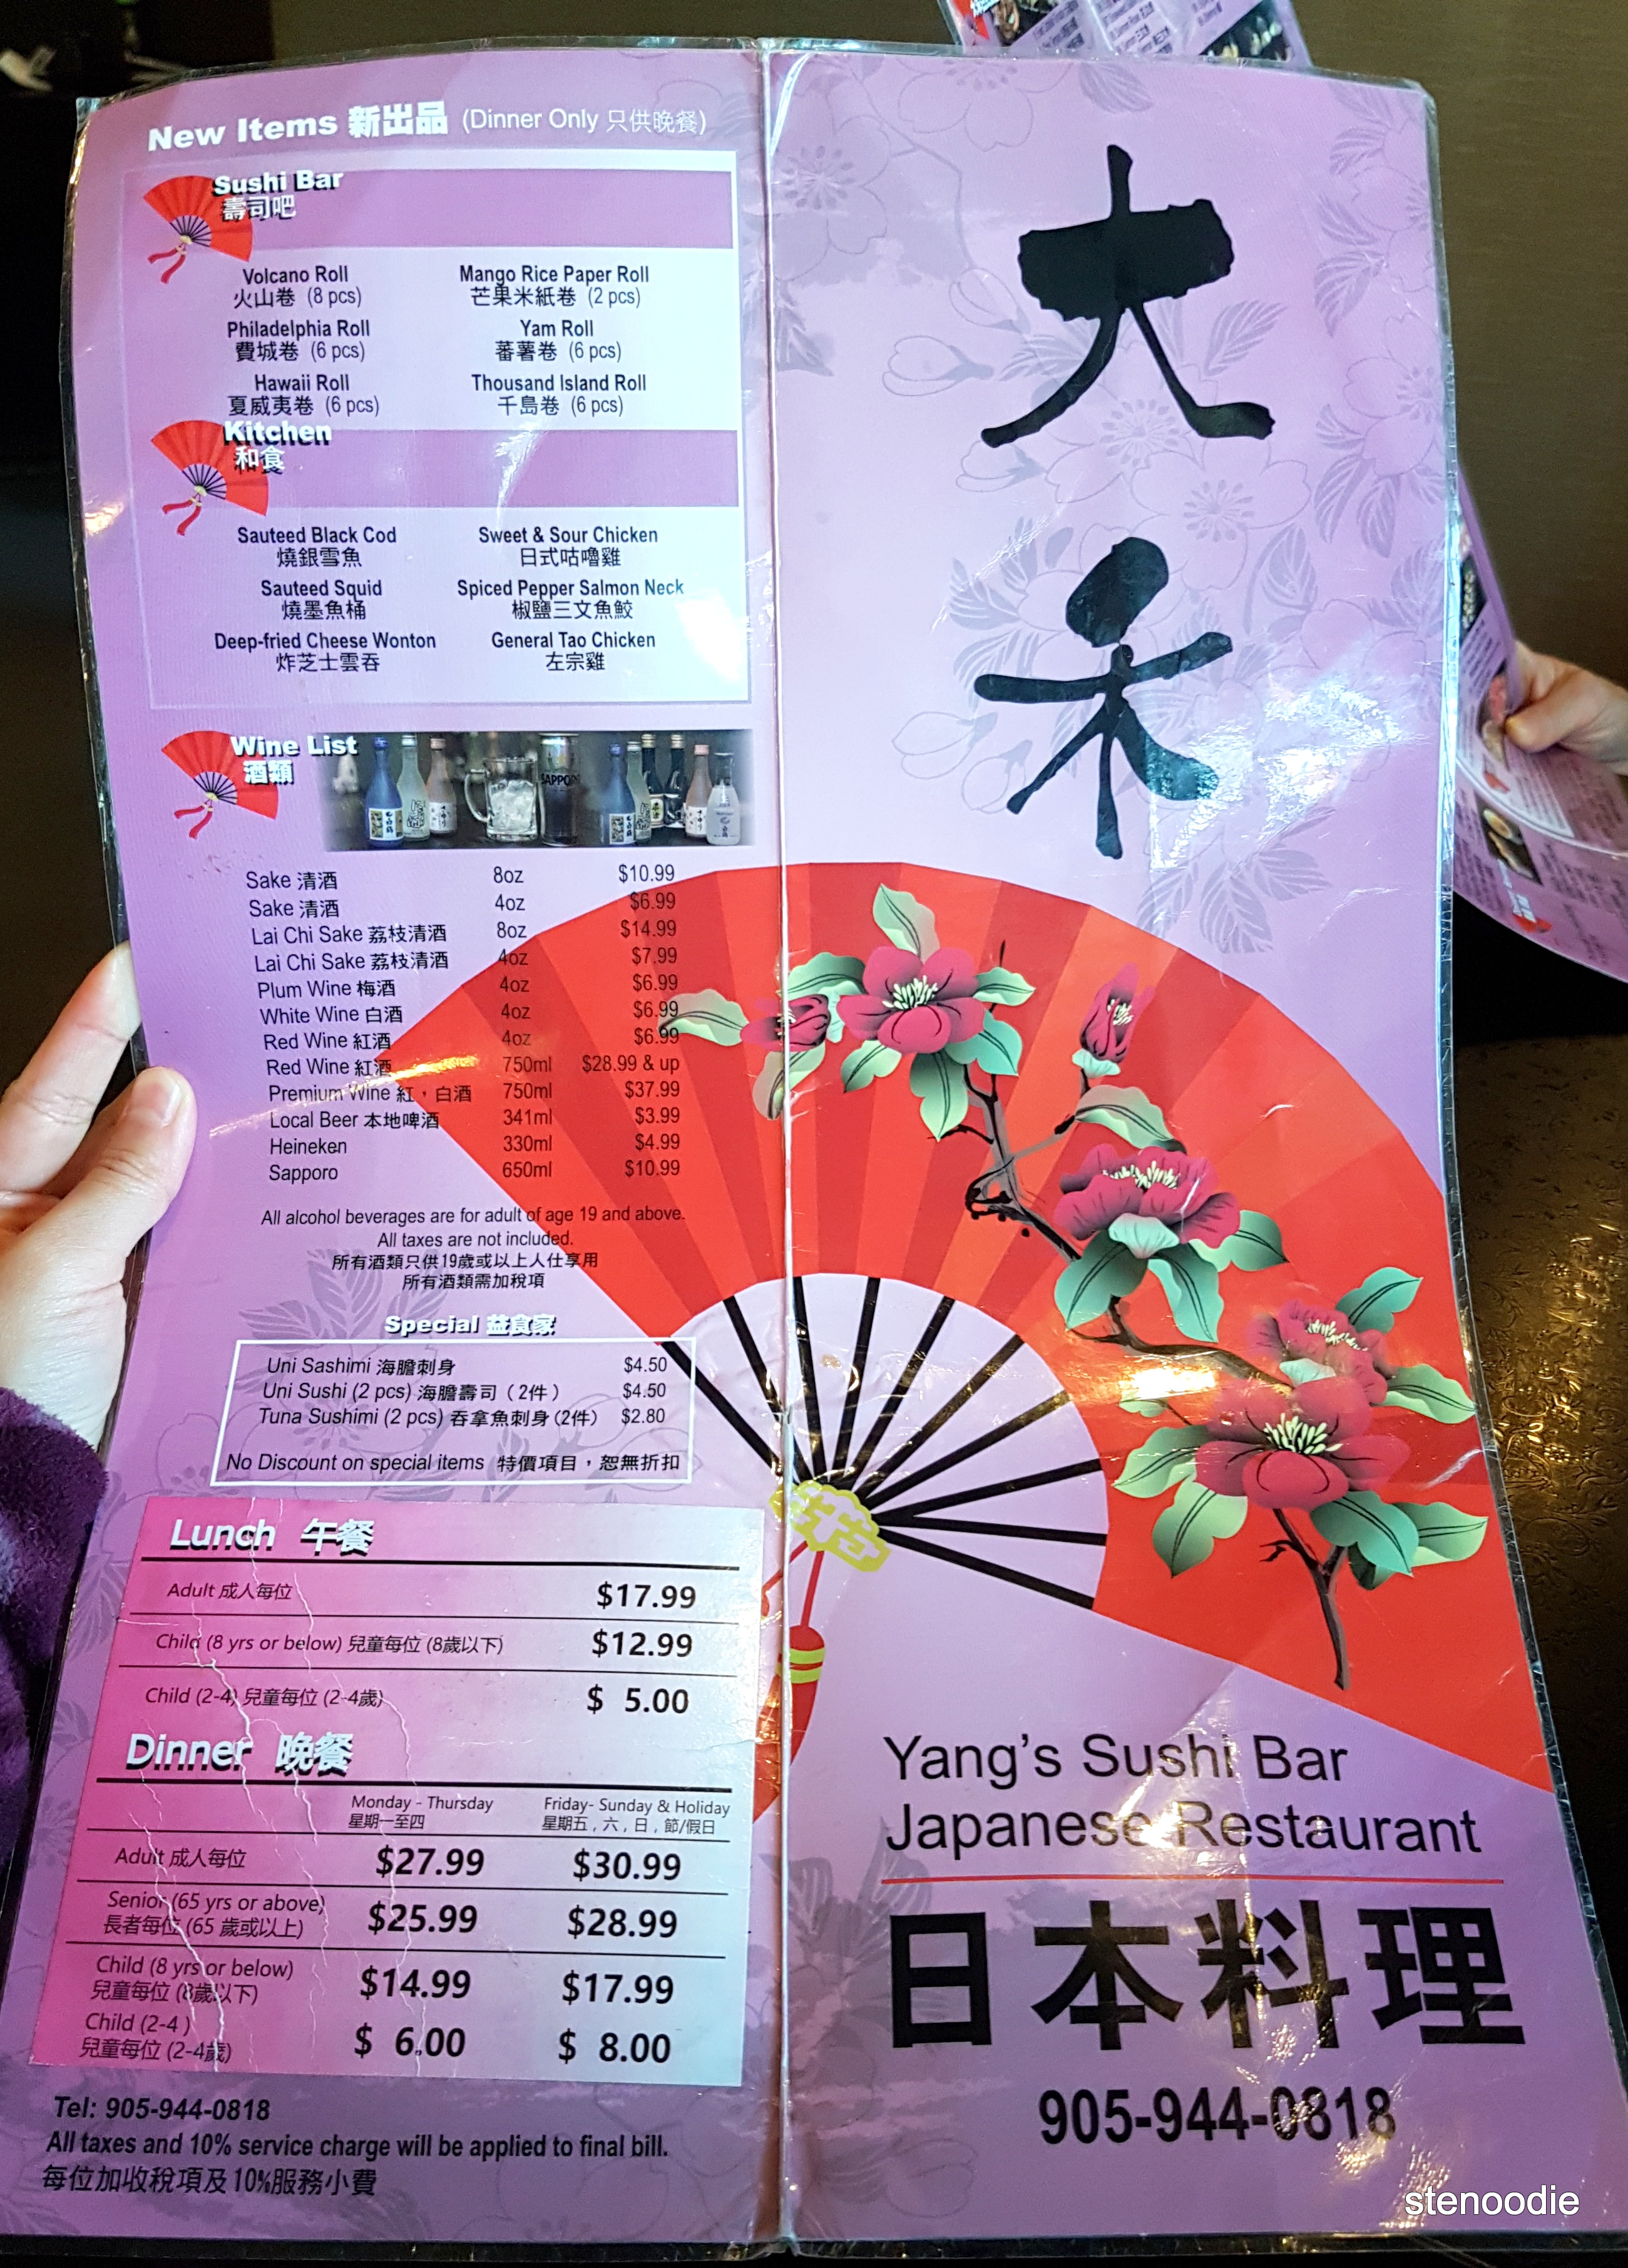 Yang's Sushi Bar Japanese Restaurant buffet prices